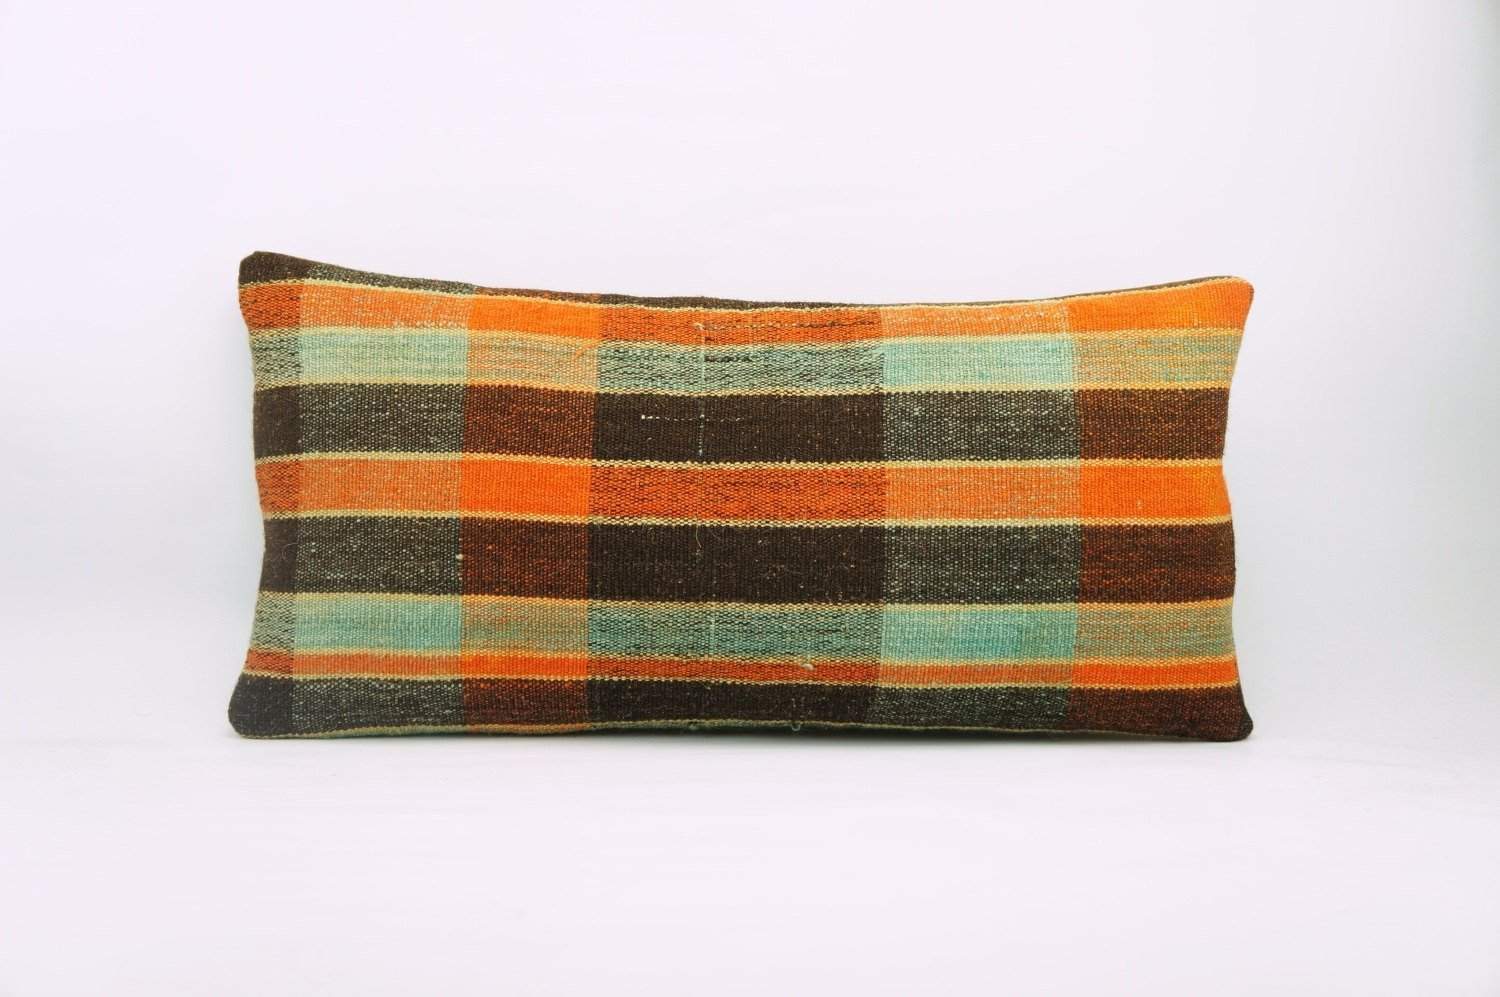 12x24 Vintage Hand Woven Kilim Pillow Lumbar Bohemian pillow case, Modern home decor  orange green brown  striped 975 - kilimpillowstore
 - 1